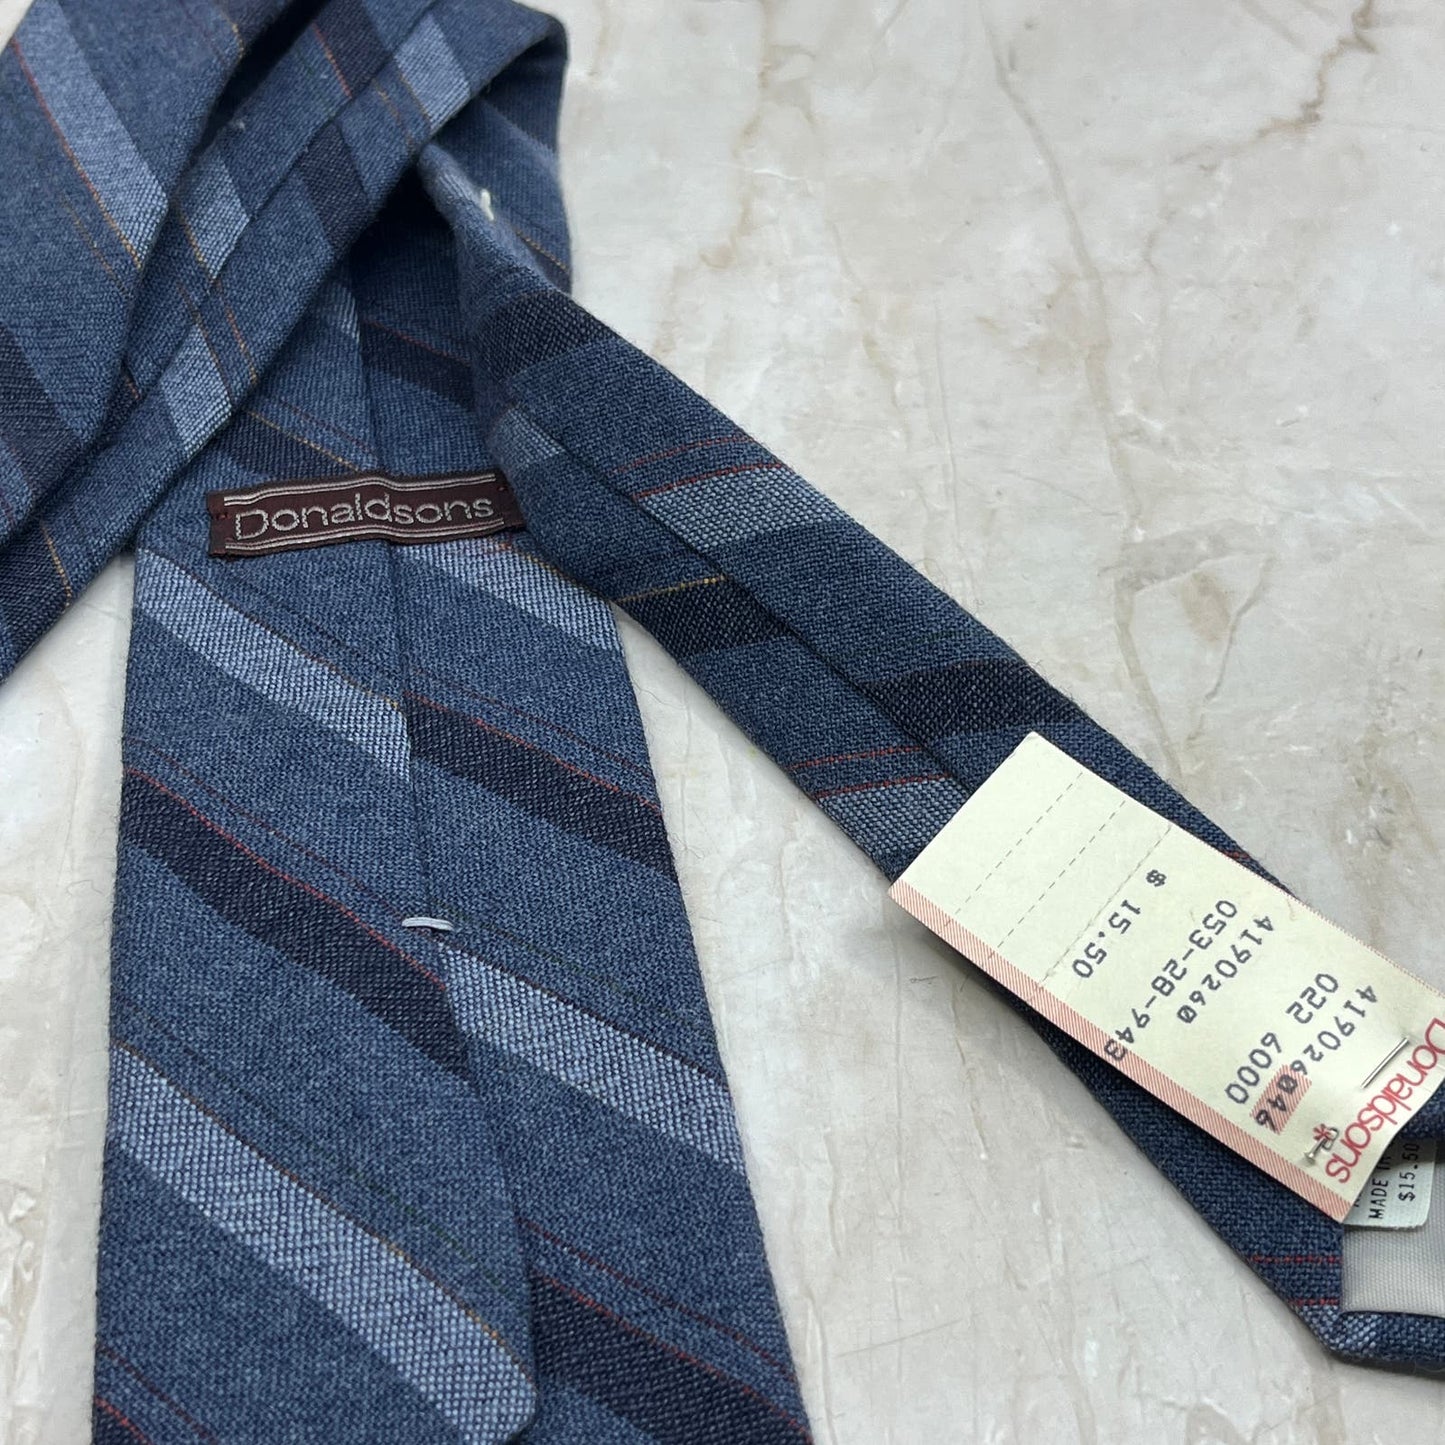 Retro Men's Donaldson's Blue Stripe All Wool New With Tags Necktie Tie TJ4-T2